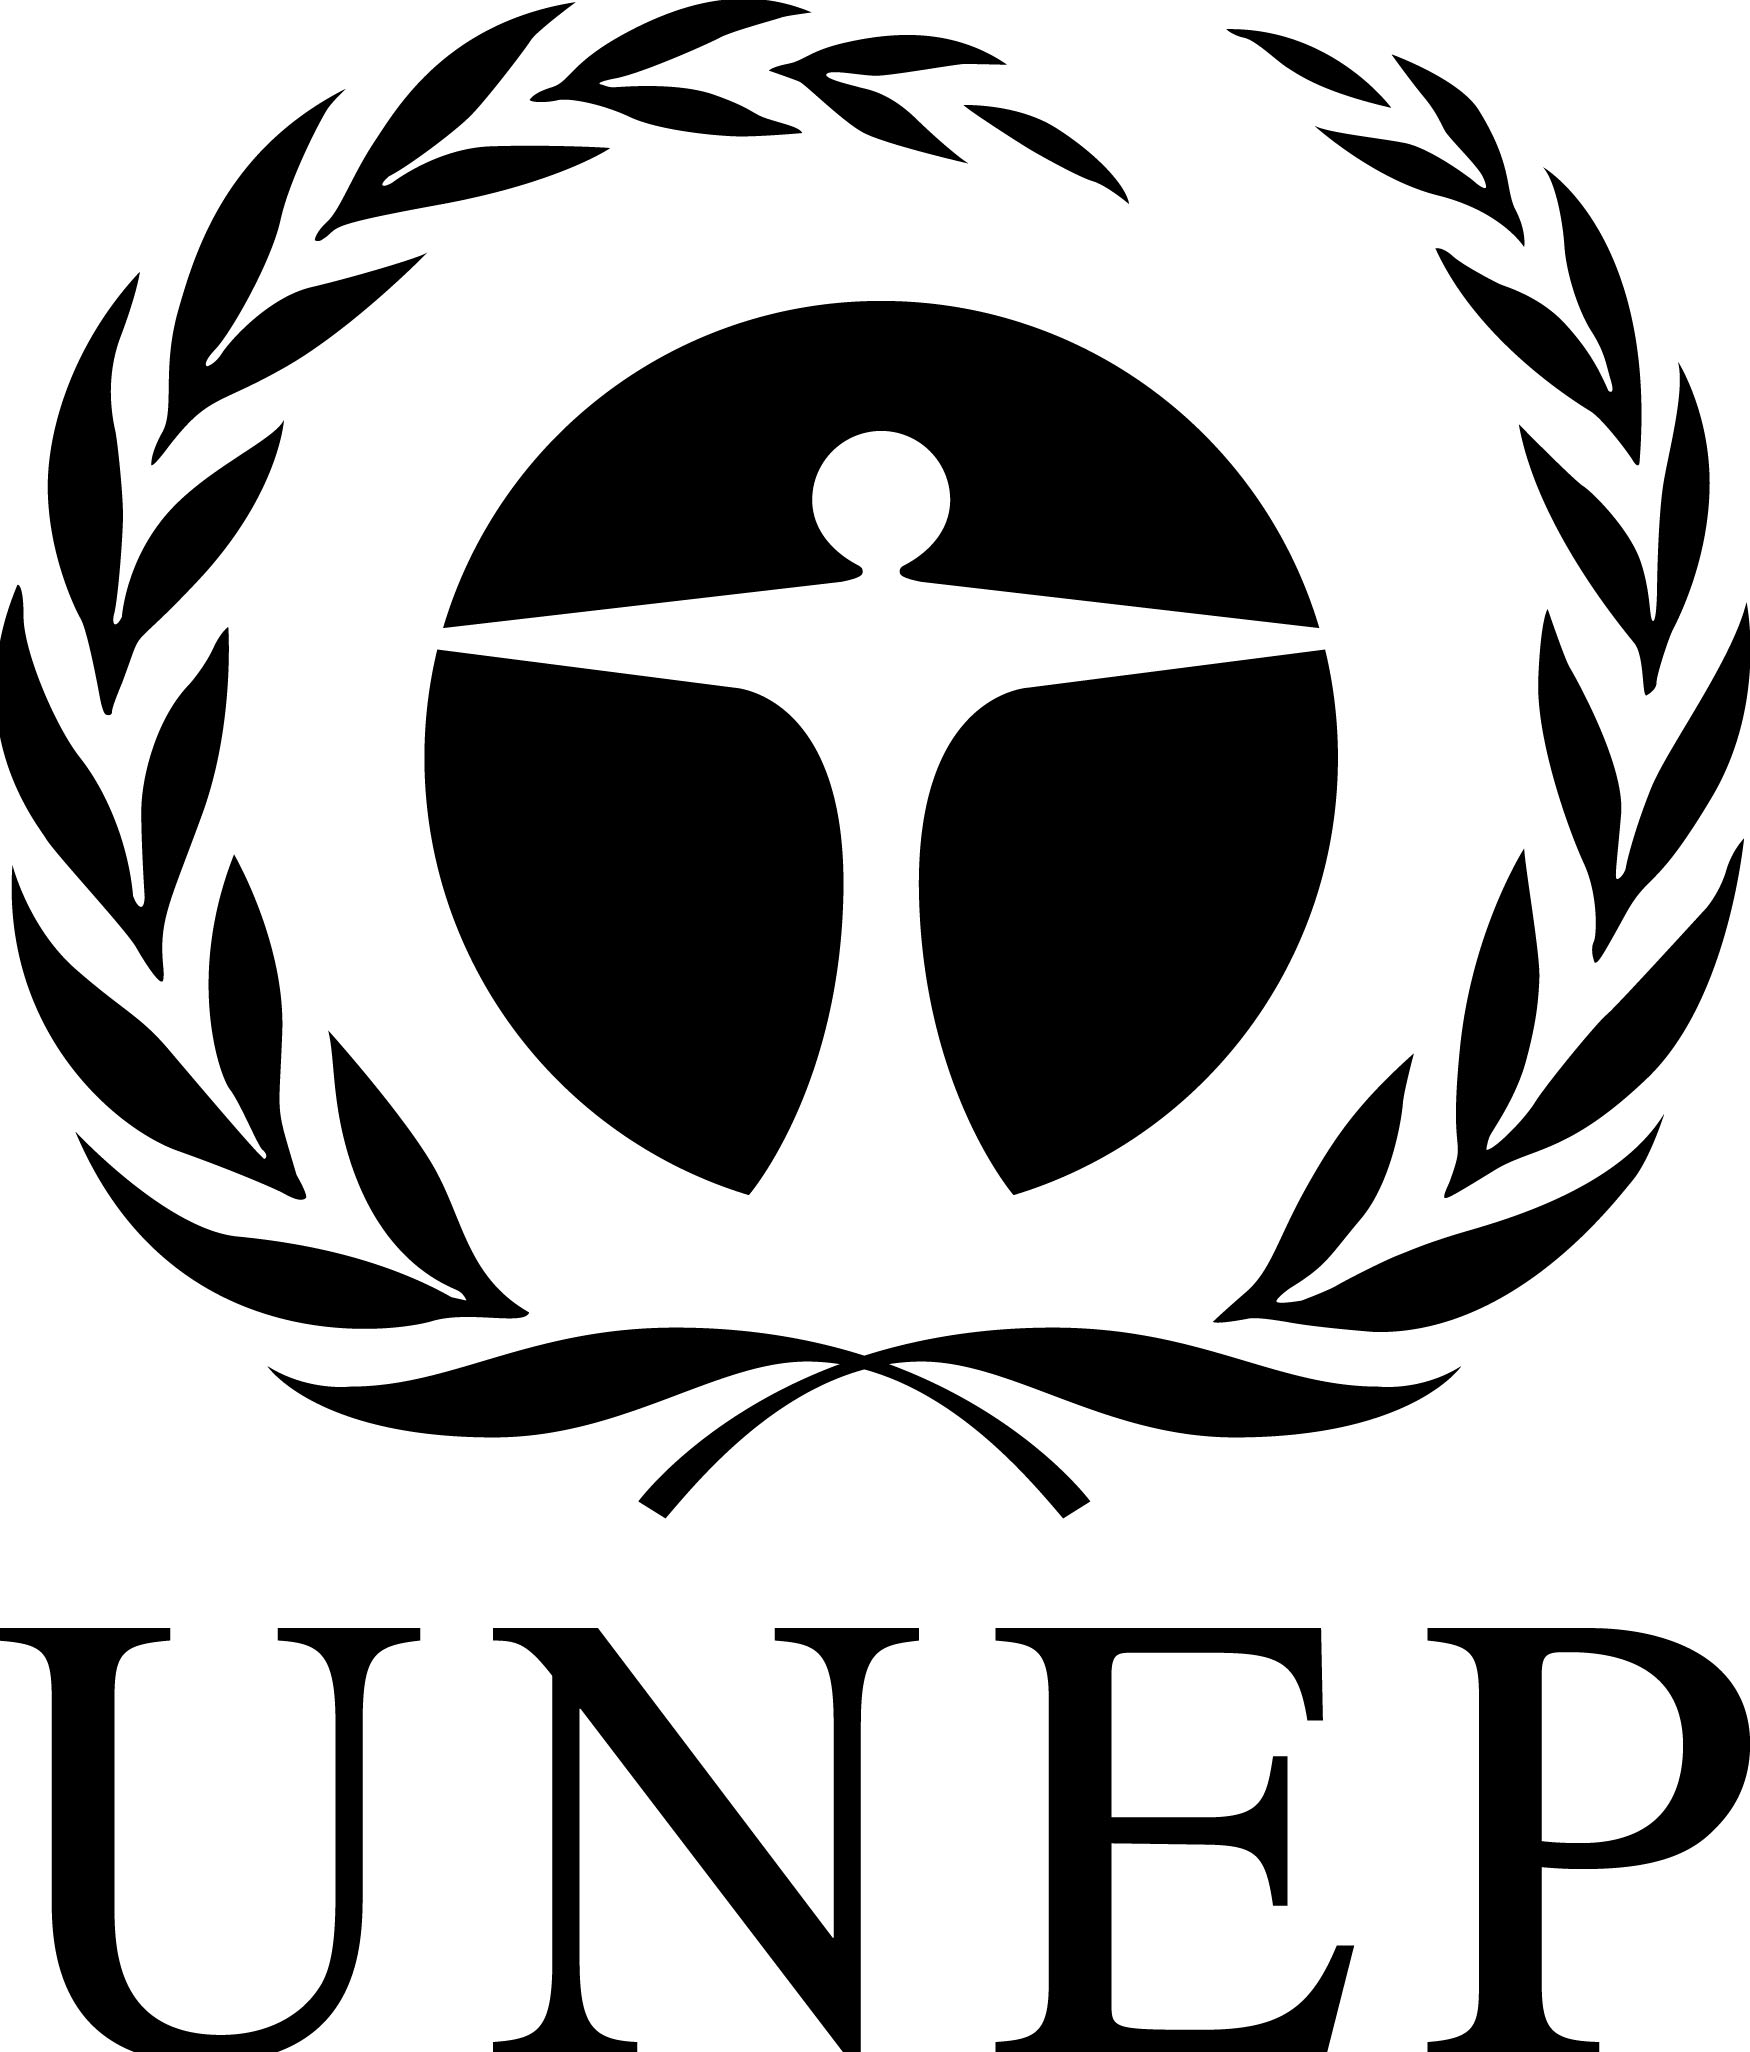 Оон природа. UNEP (ЮНЕП). Лого ООН ЮНЕП. ЮНЭП логотип. Программа ООН по окружающей среде логотип.